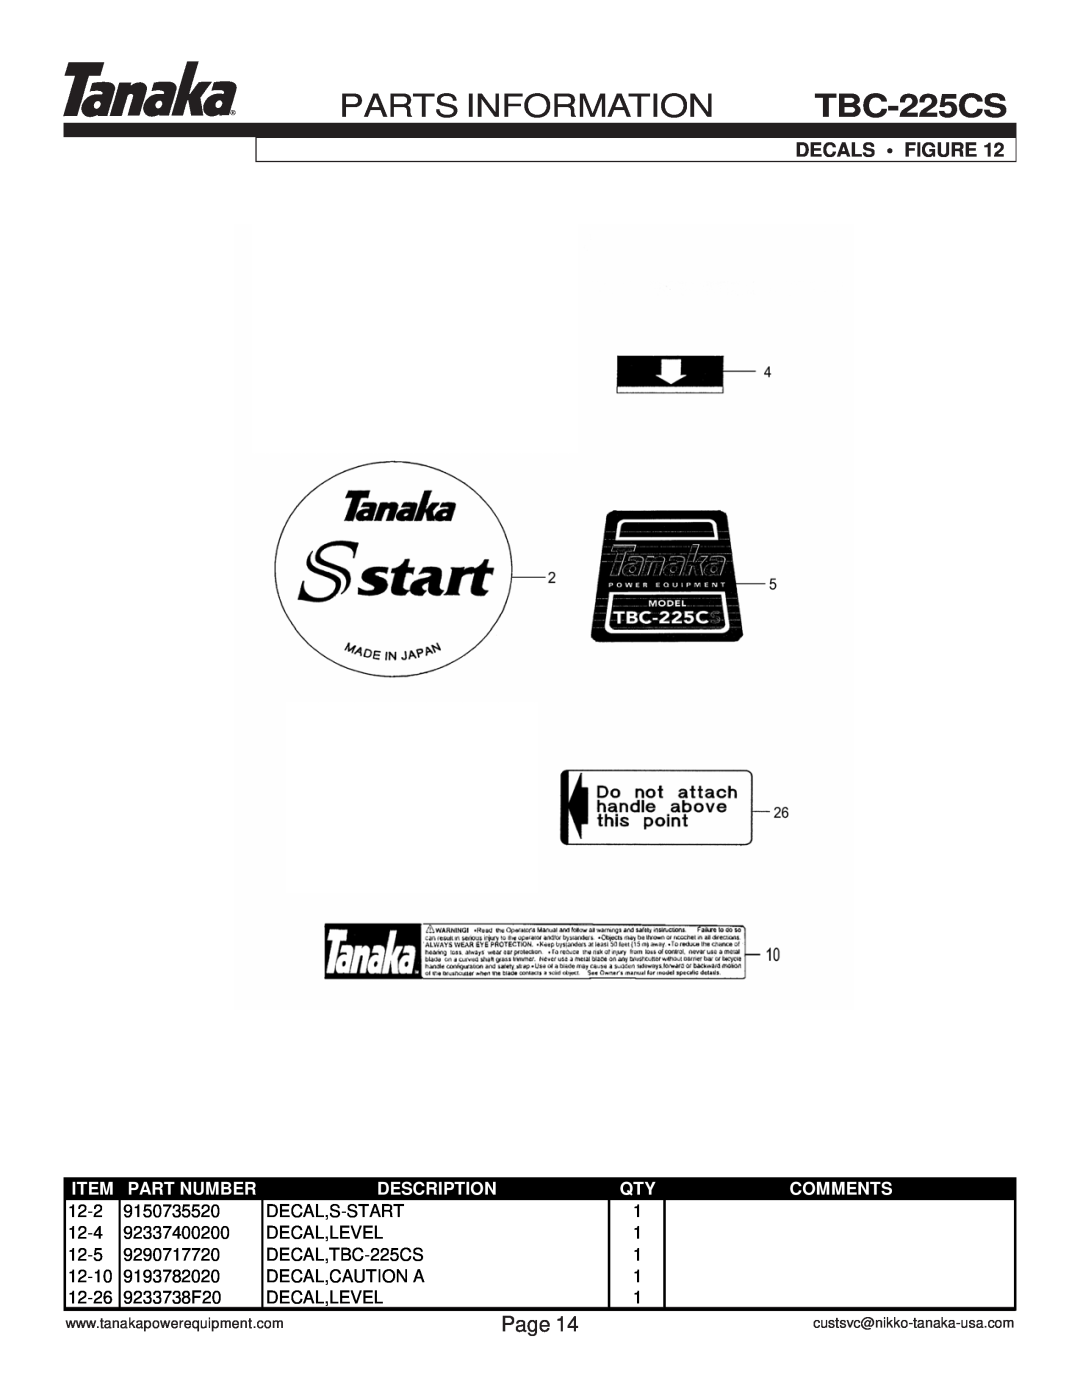 Tanaka TBC-225CS manual Decals Figure, Parts Information, Page, Part Number, Description, Comments 